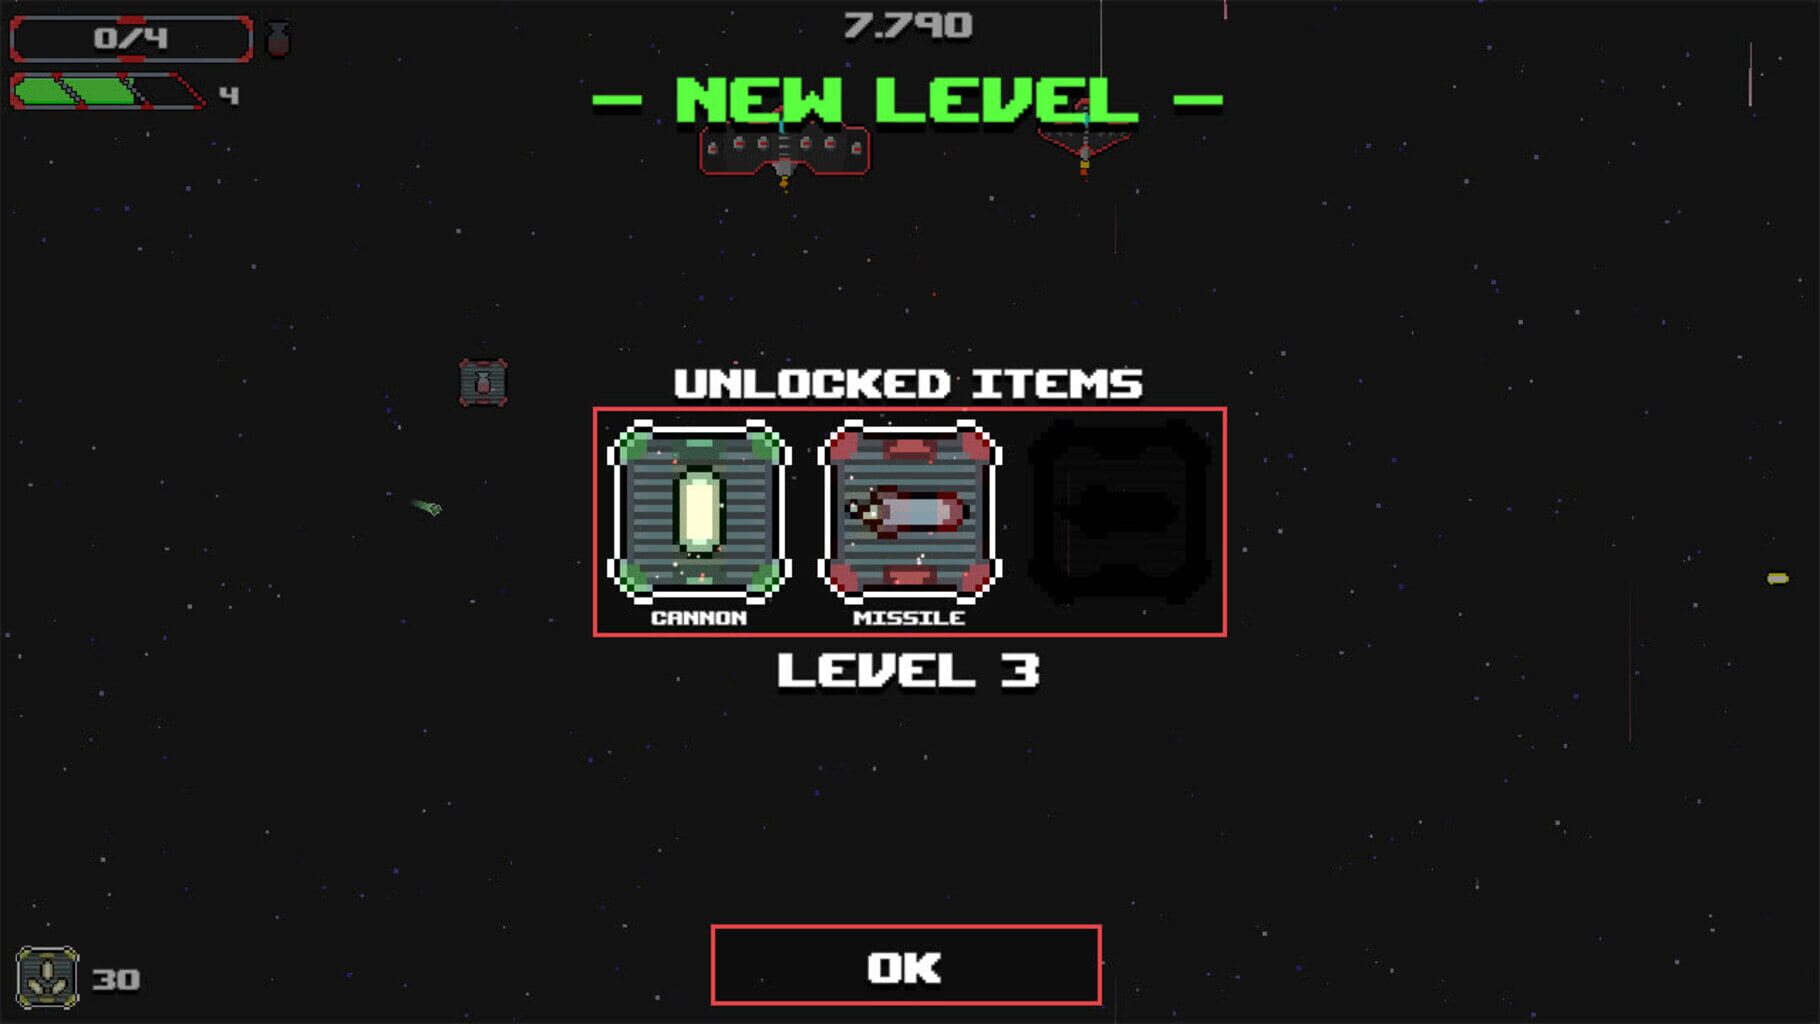 Arcade Space Shooter 2 in 1 screenshot